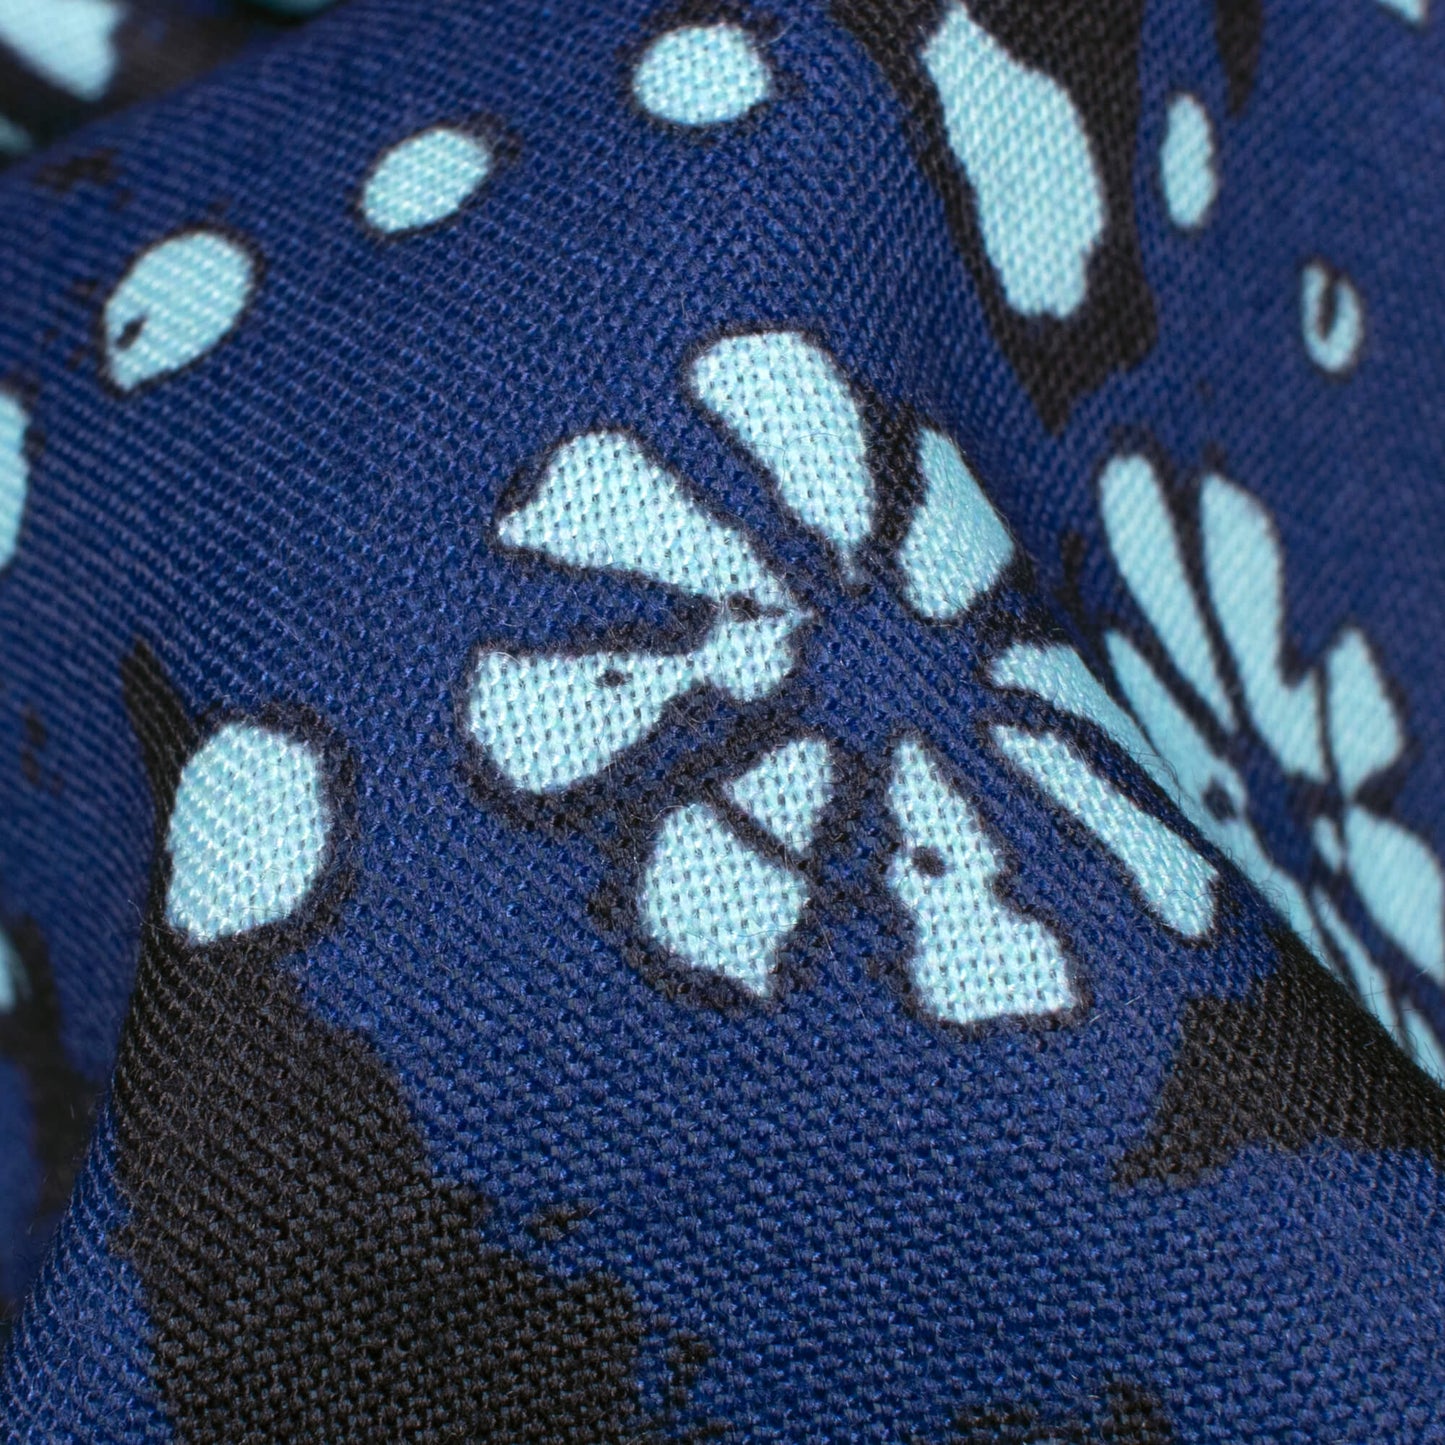 Yale Blue And Powder Blue Floral Pattern Digital Print Rayon Fabric